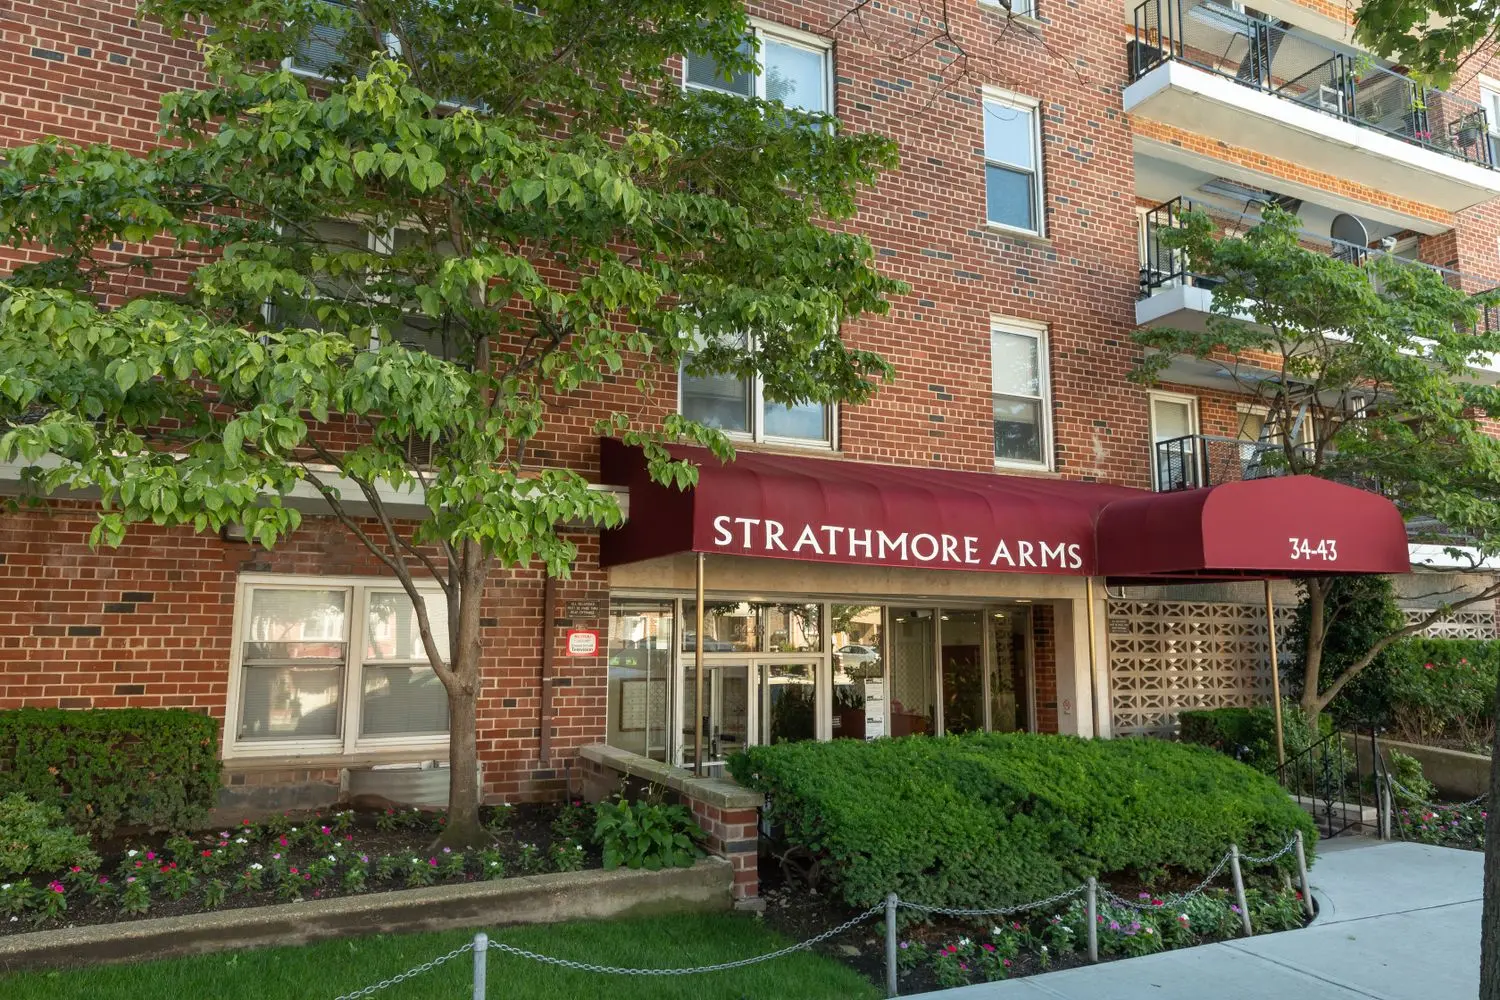 Strathmore Arms, 34-43 60th Street